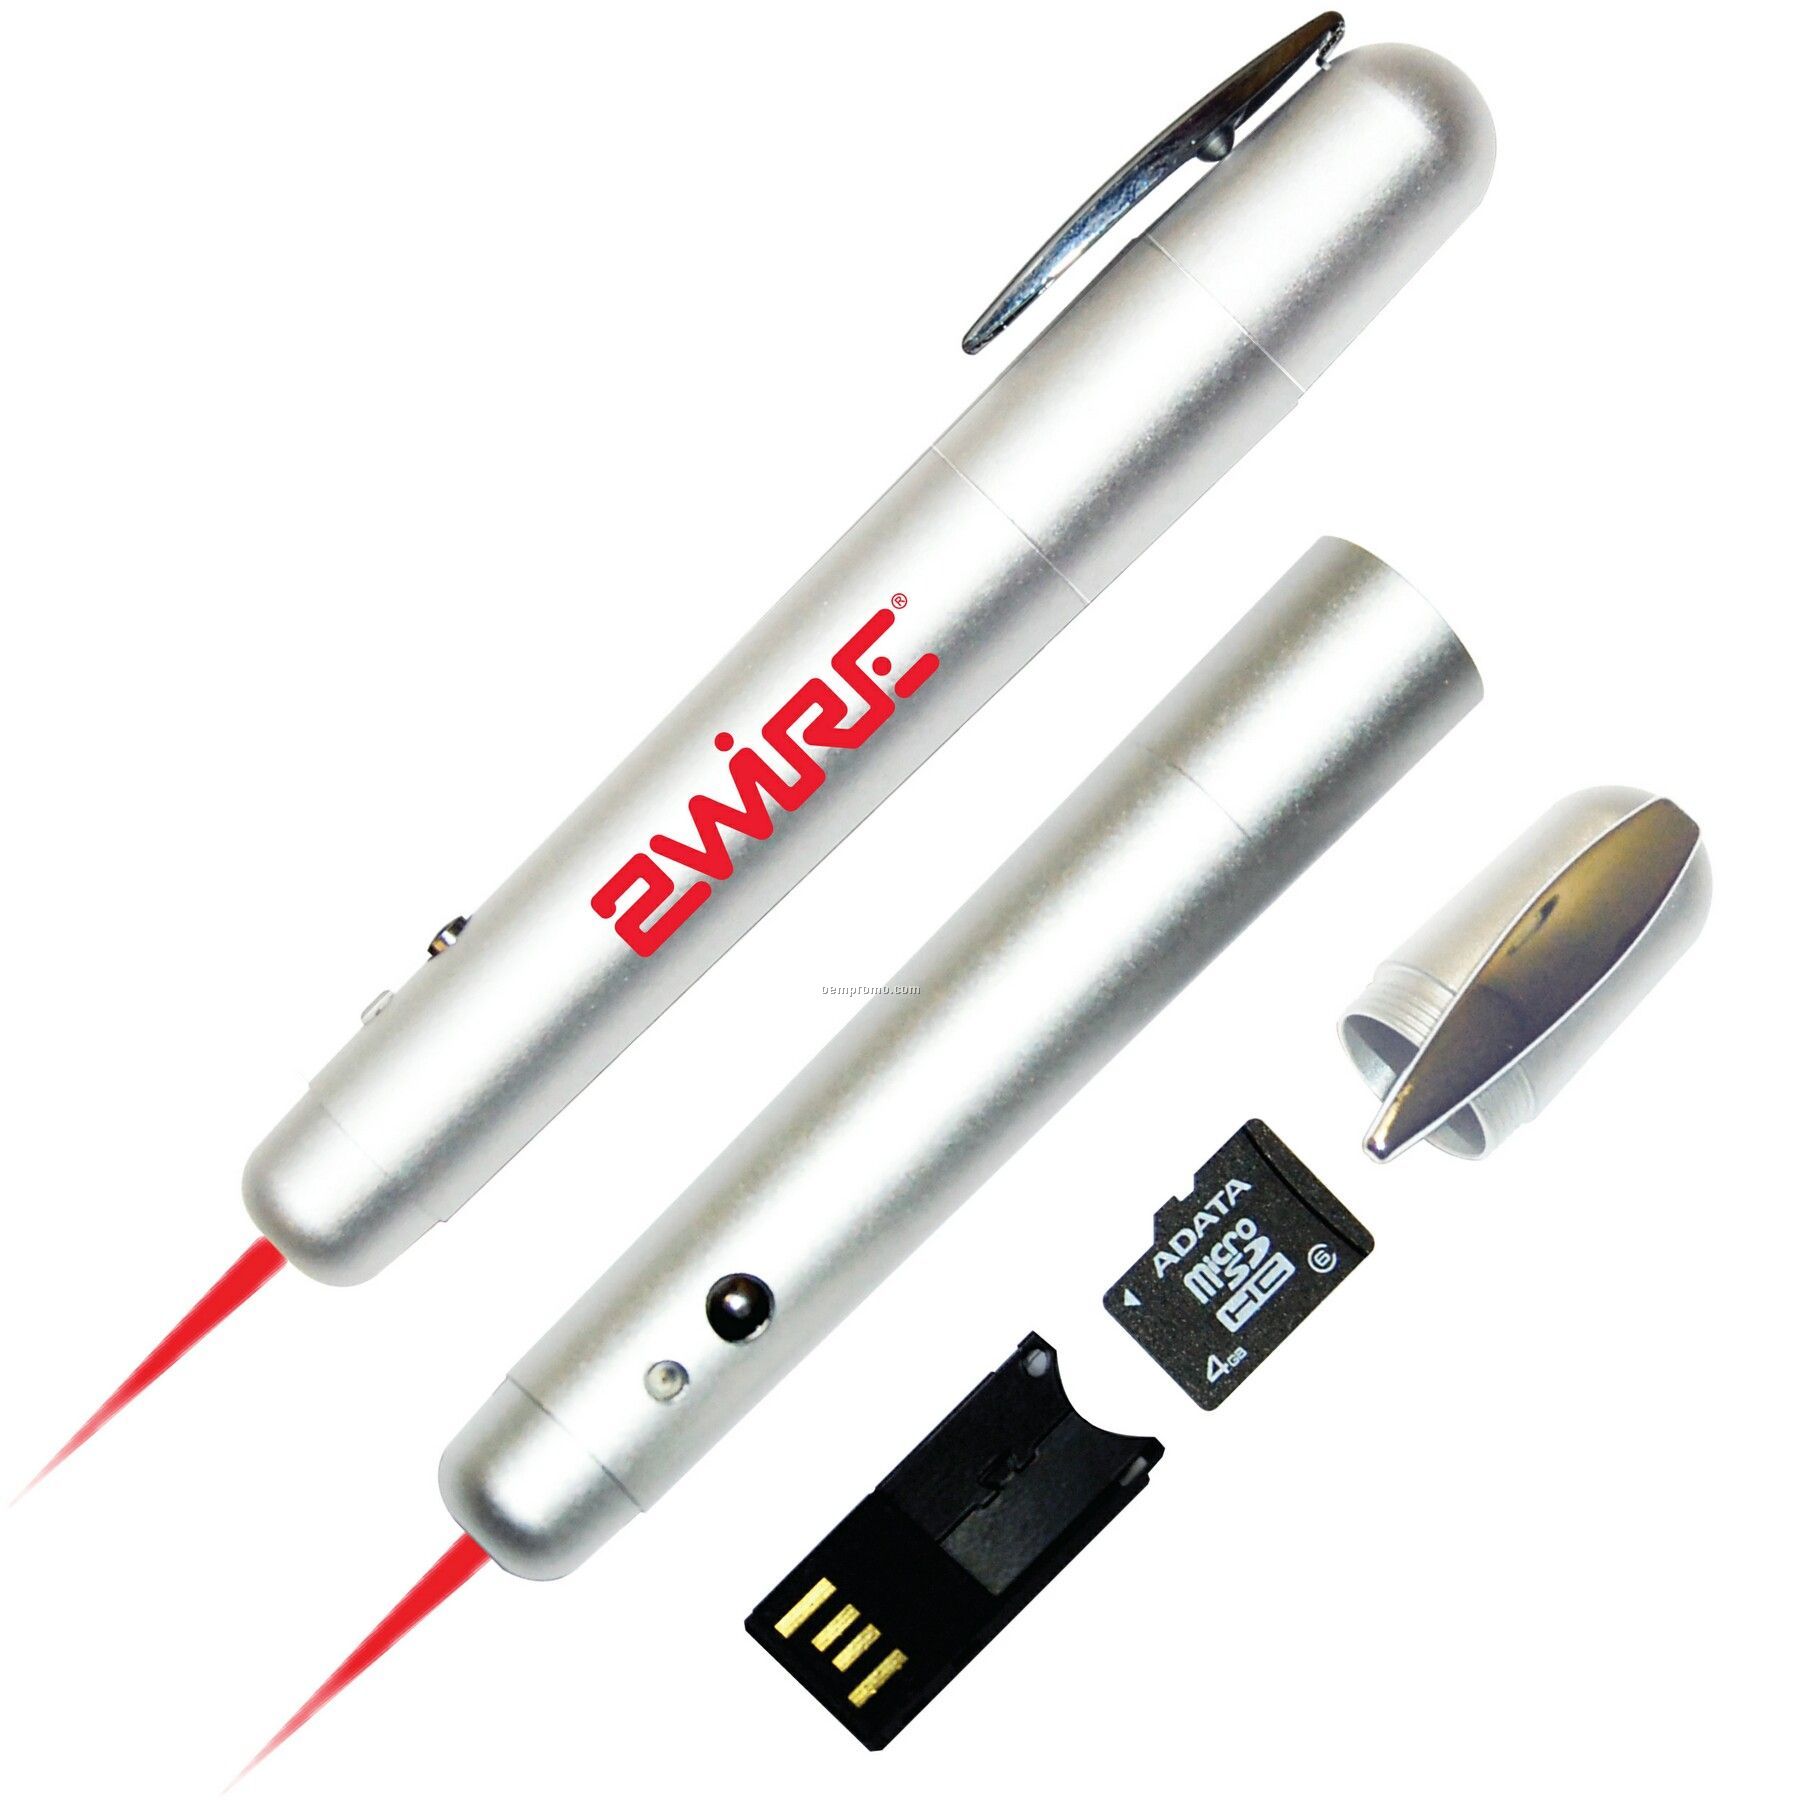 Alpec Comet USB Laser Pointer - 16 Gb